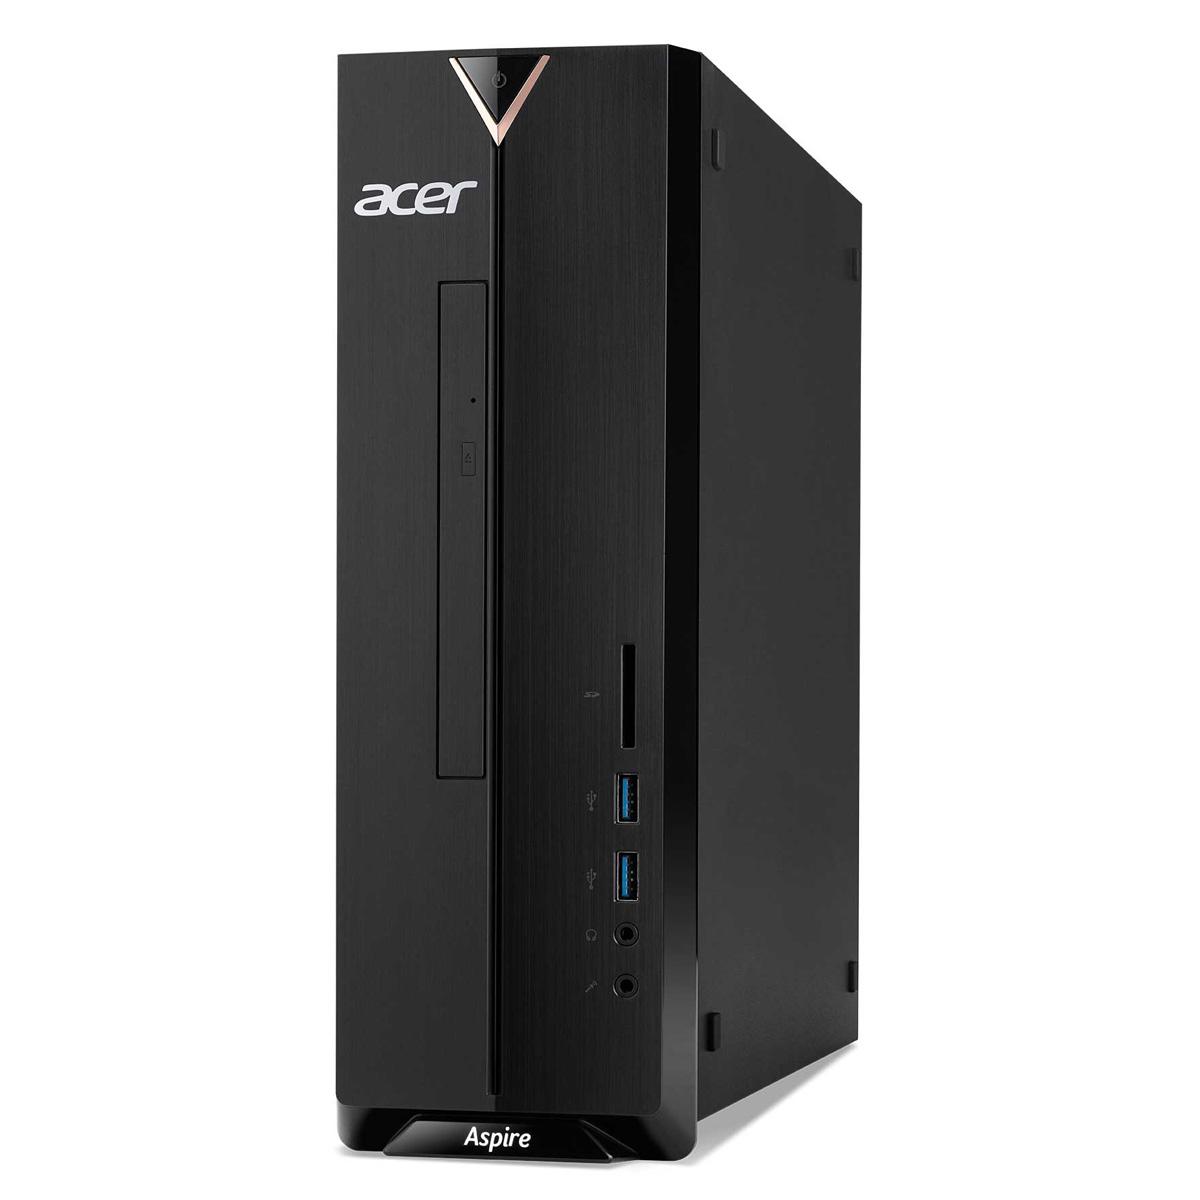 Acer Aspire XC i3 8GB 256GB Refurb Desktop Computer for $175.99 Shipped